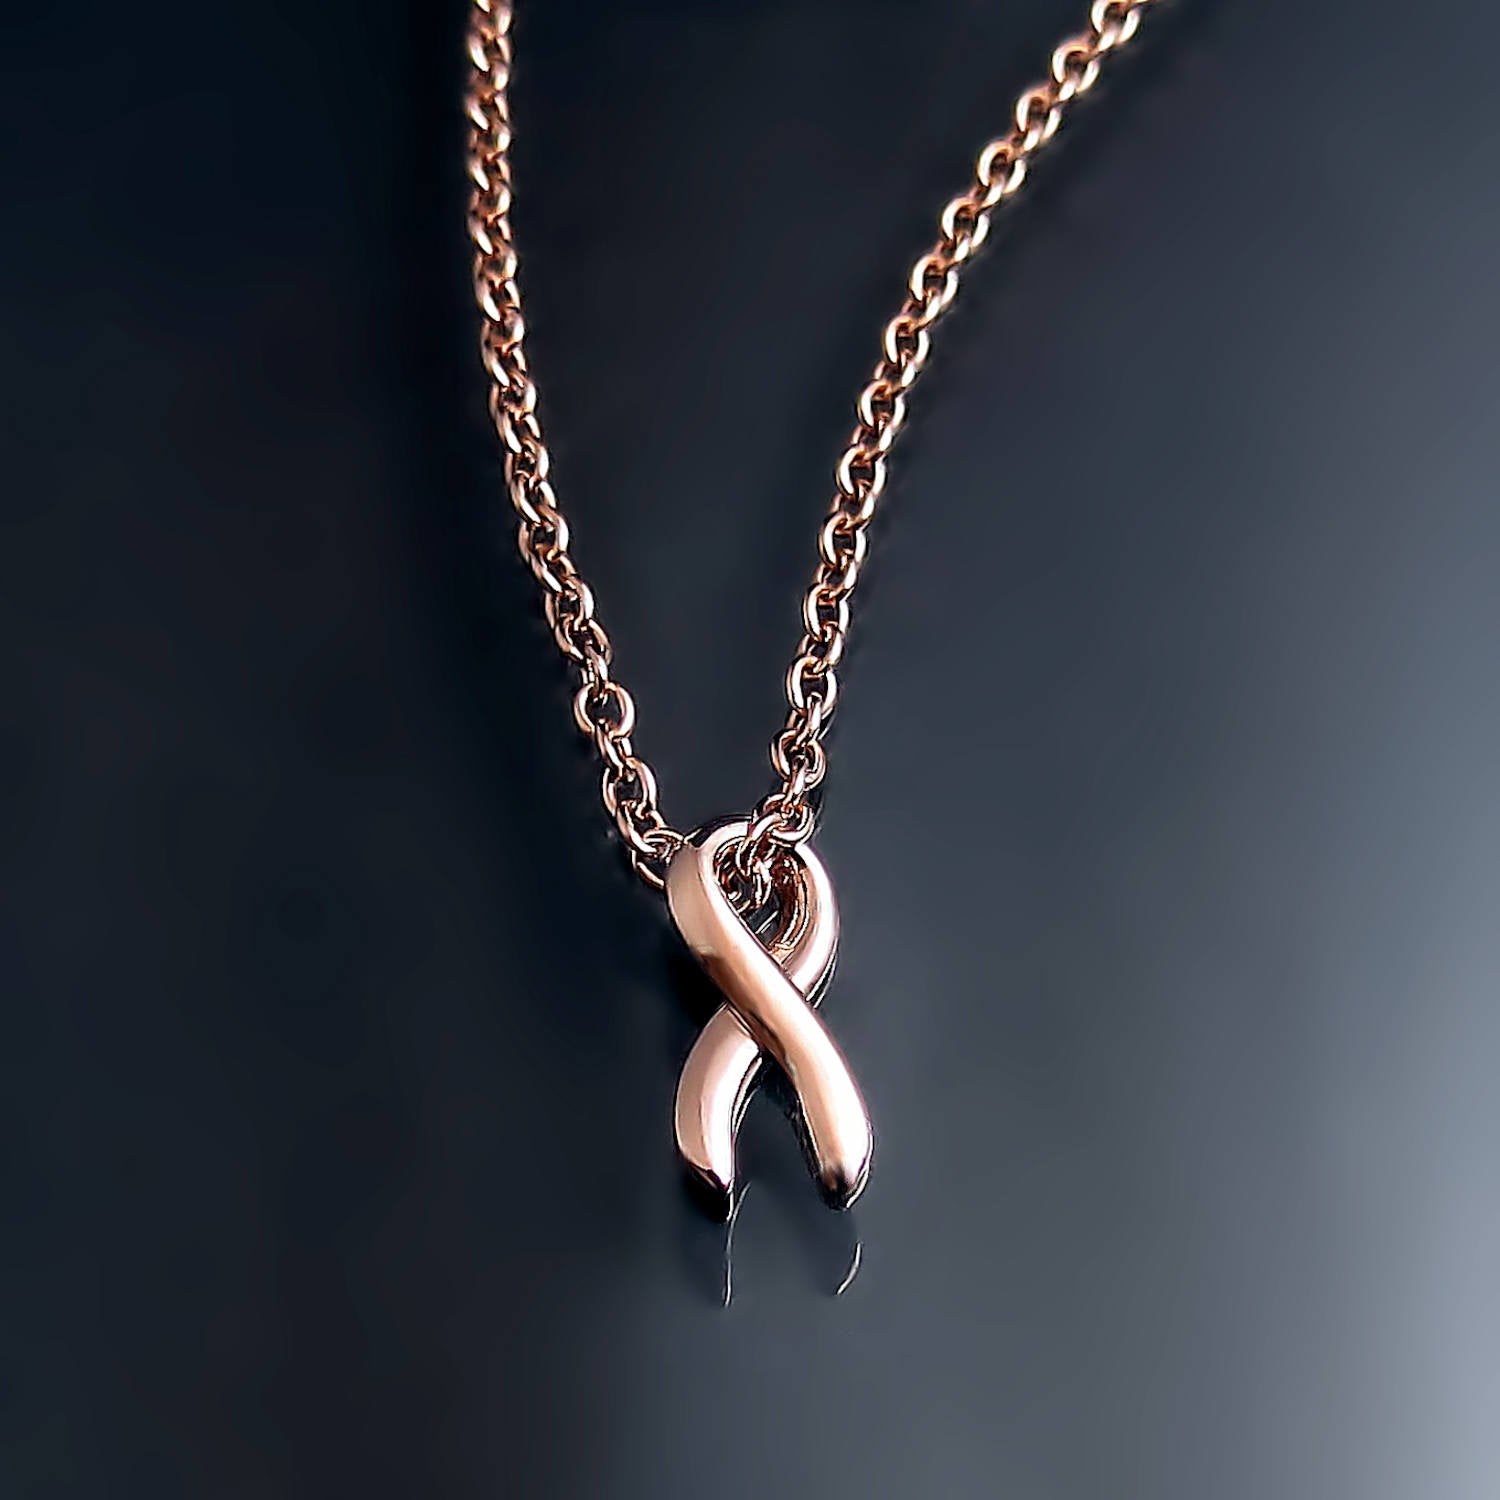 Pink Ribbon Breast Cancer Awareness Pendant in 14K Rose Gold